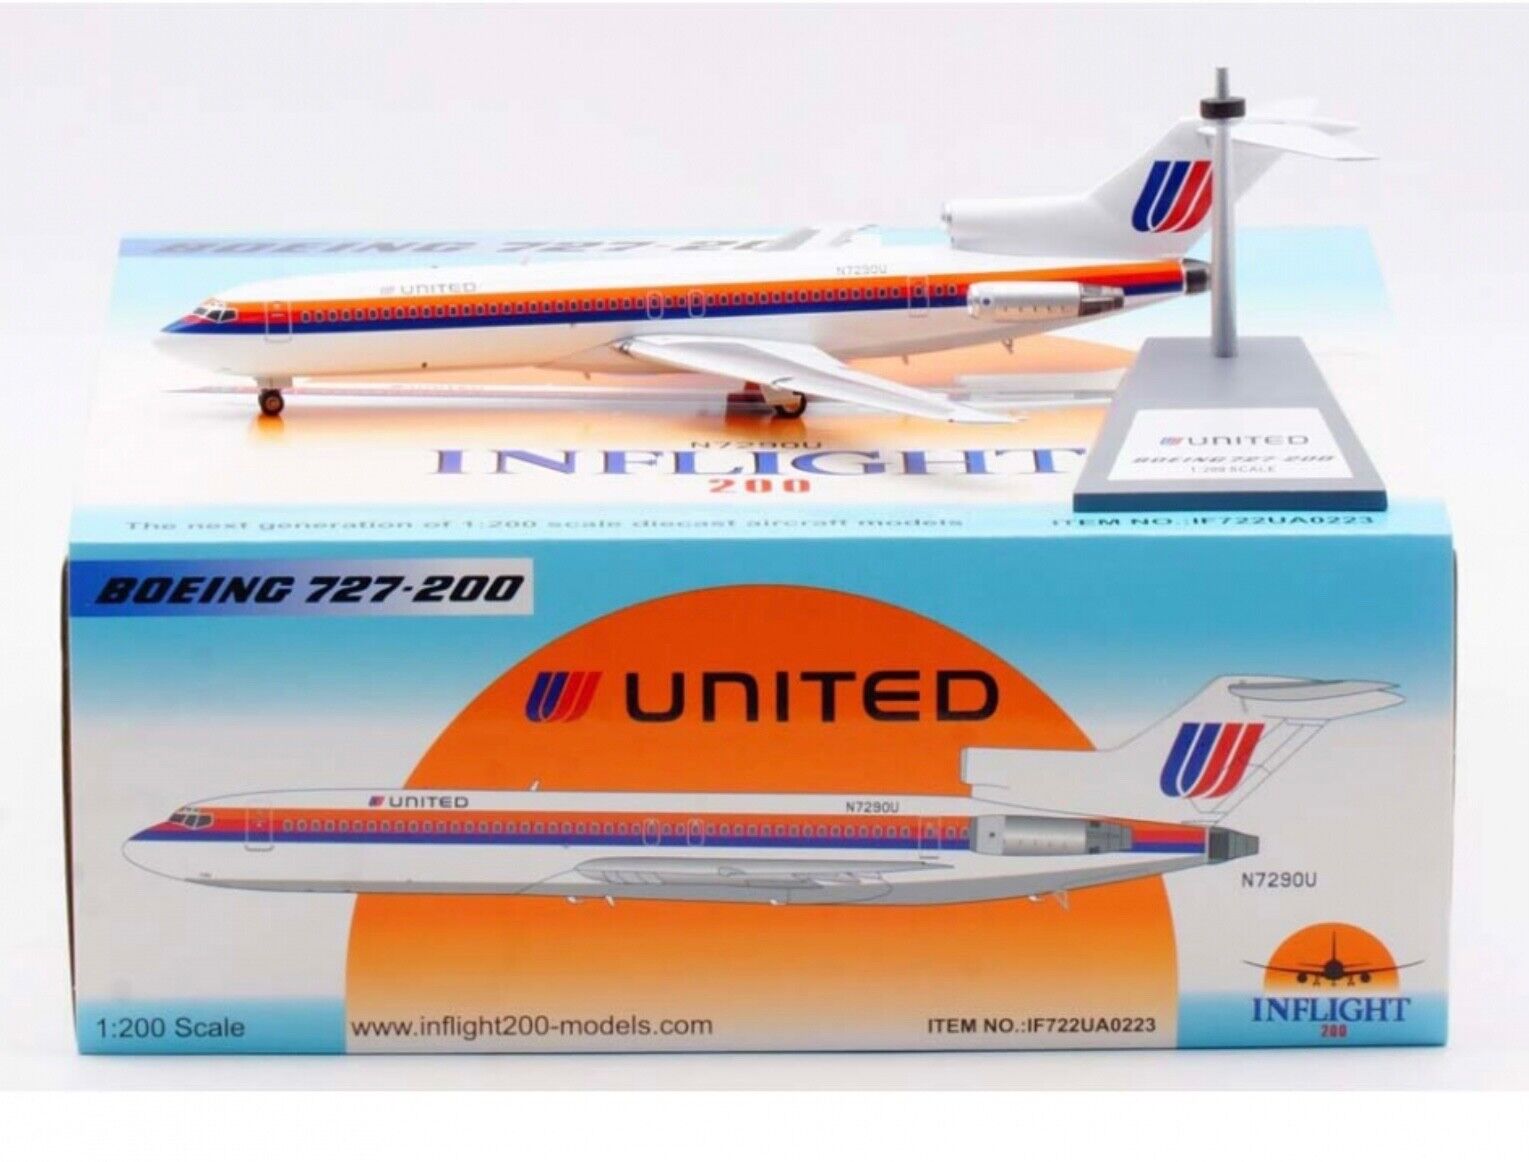 Inflight 200 UNITED B 727-200 “Saul Bass”, Reg. N7290U, #IF722UA0223